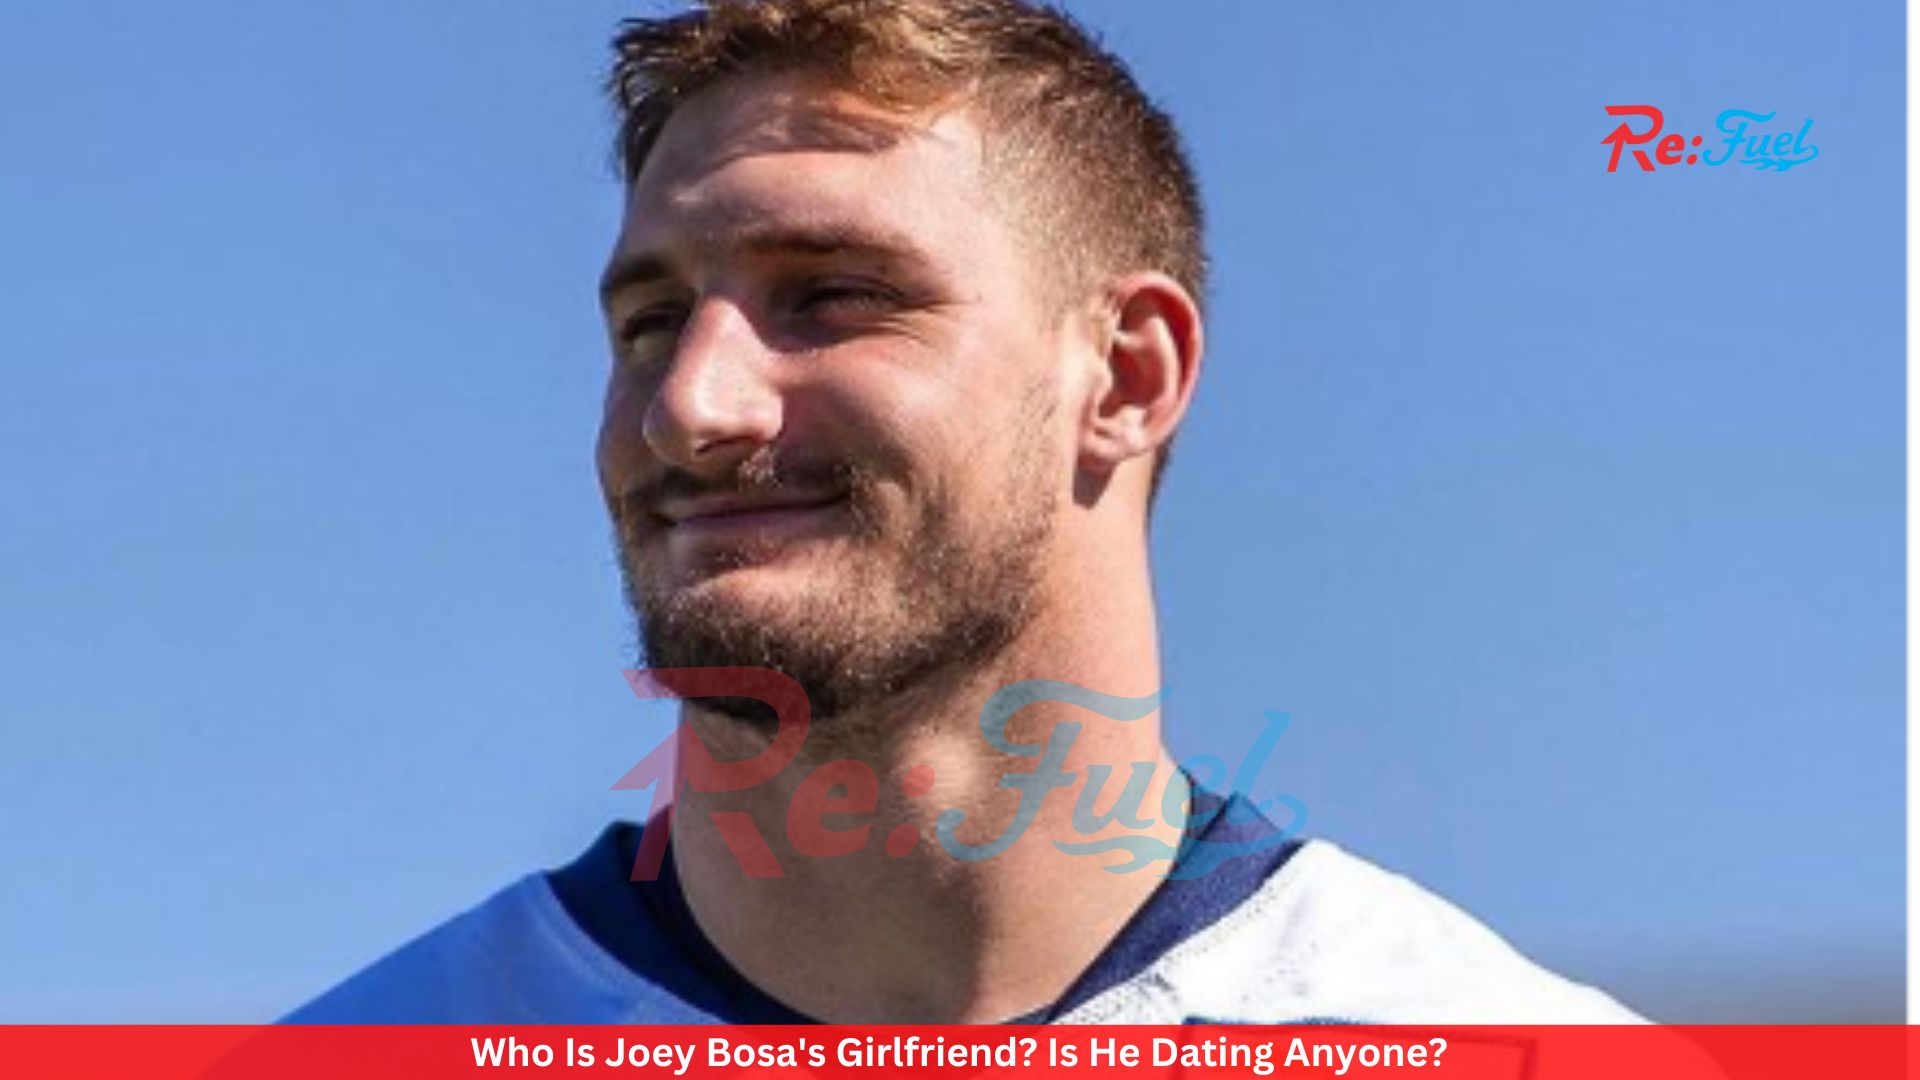 Who Is Joey Bosa's Girlfriend? Is He Dating Anyone?